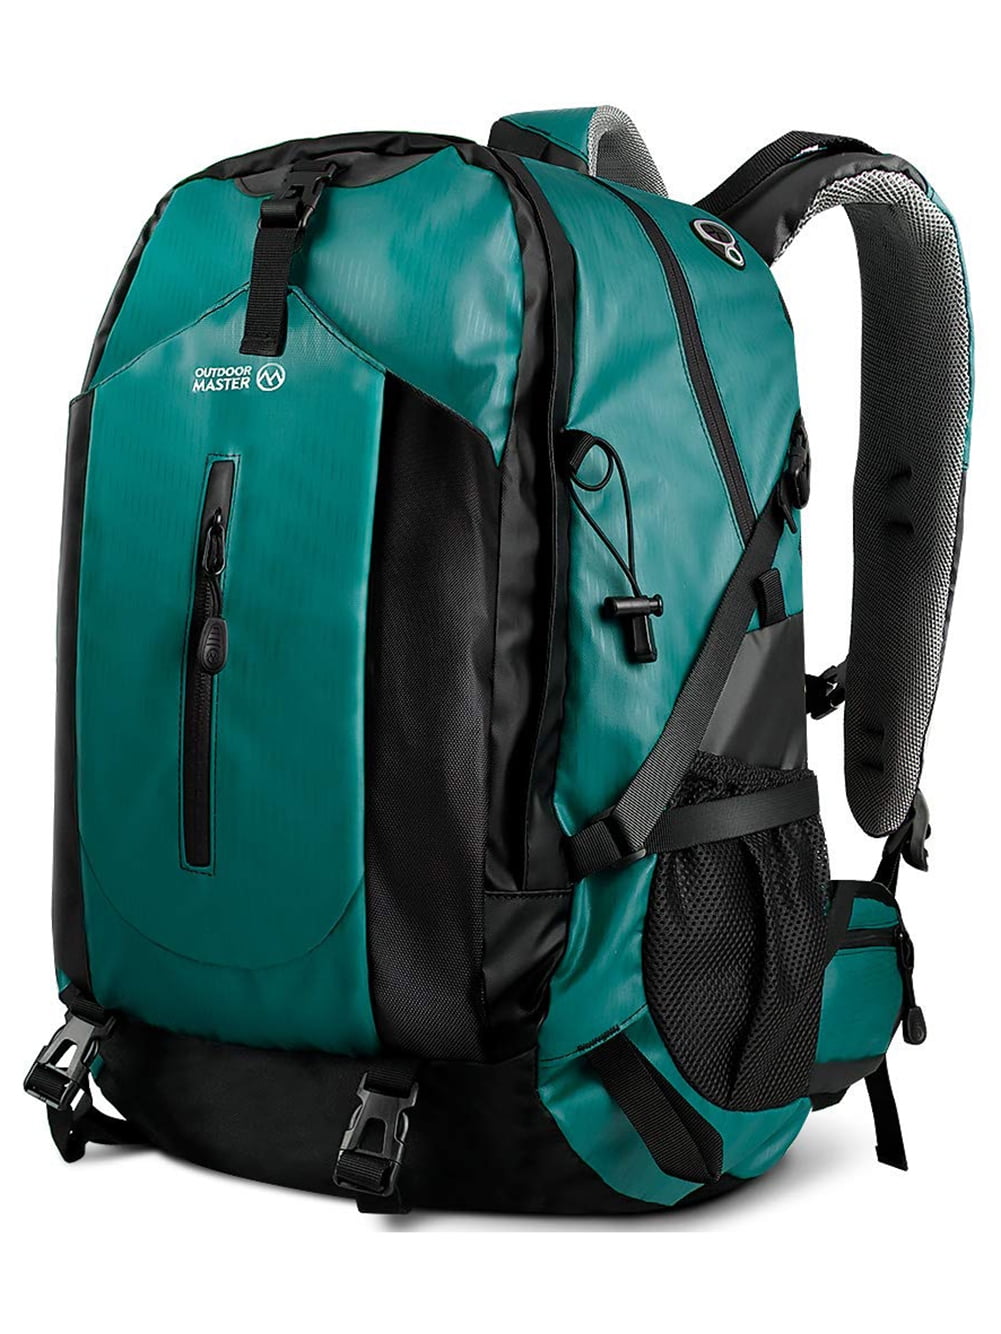 Waterproof Rain Cover Camping For Travel Hiking Backpack Trolley Bag Rucksack 